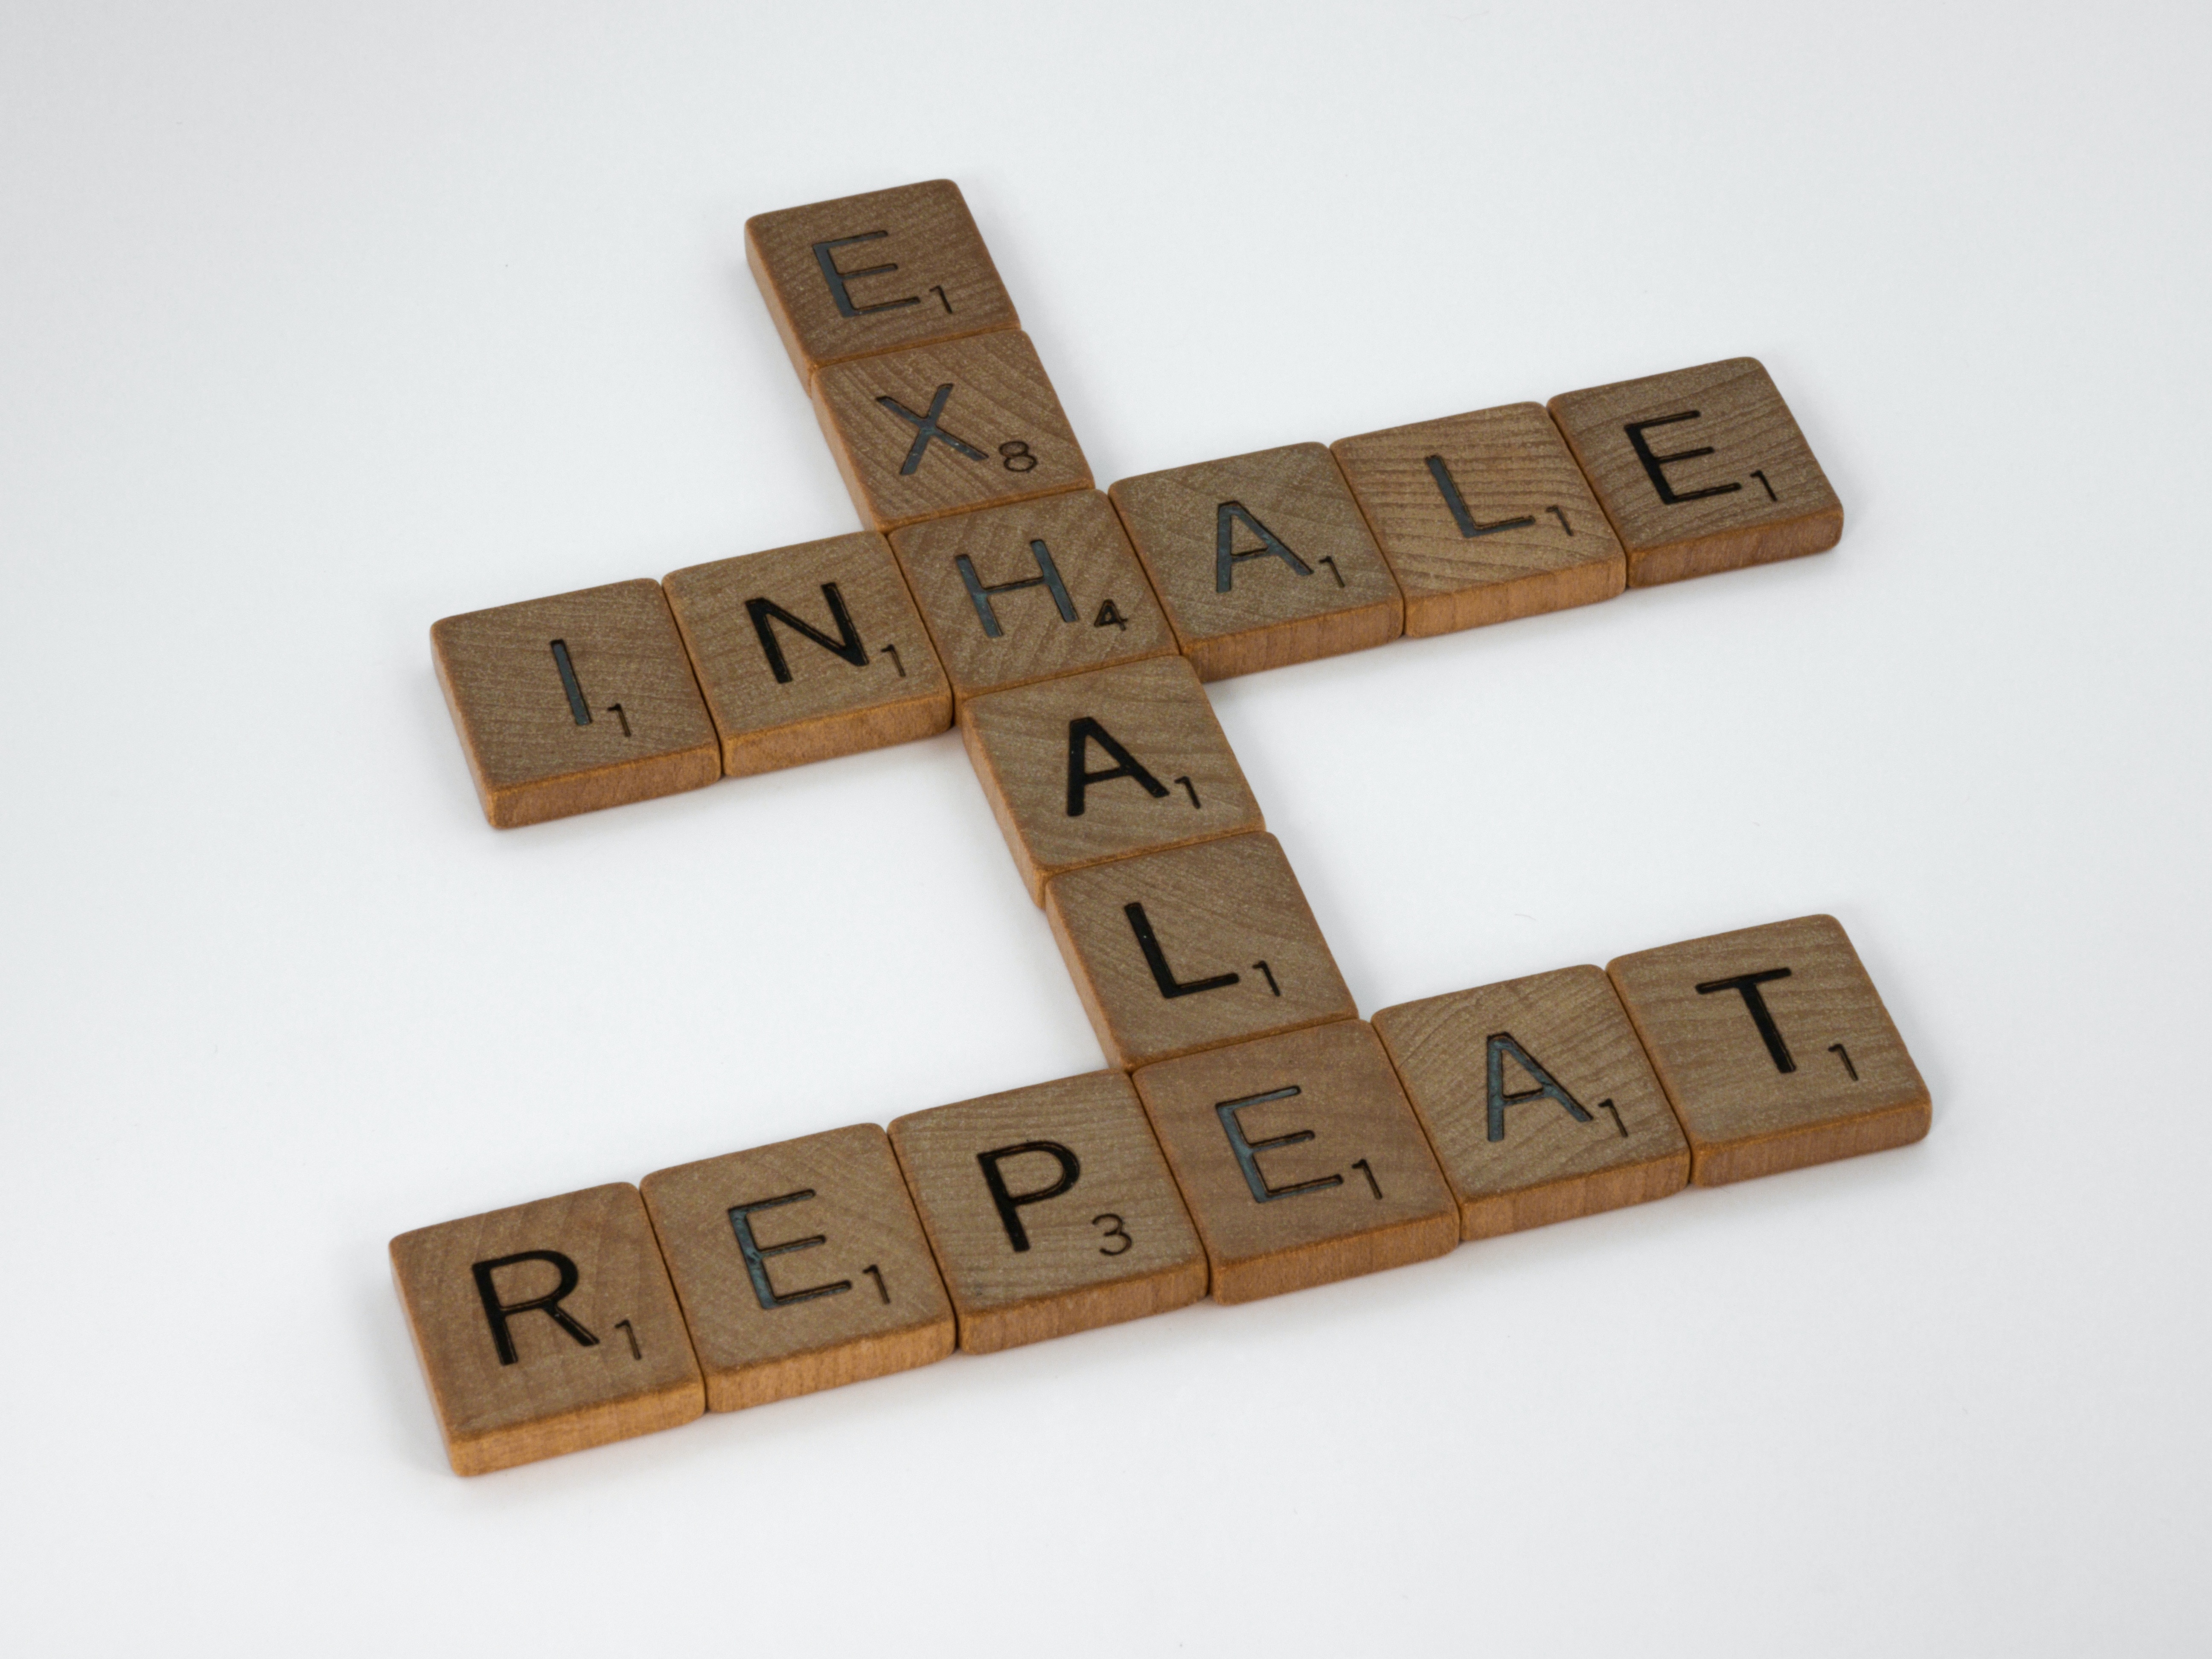 Scrabble tiles reading inhale, exhale, repeat